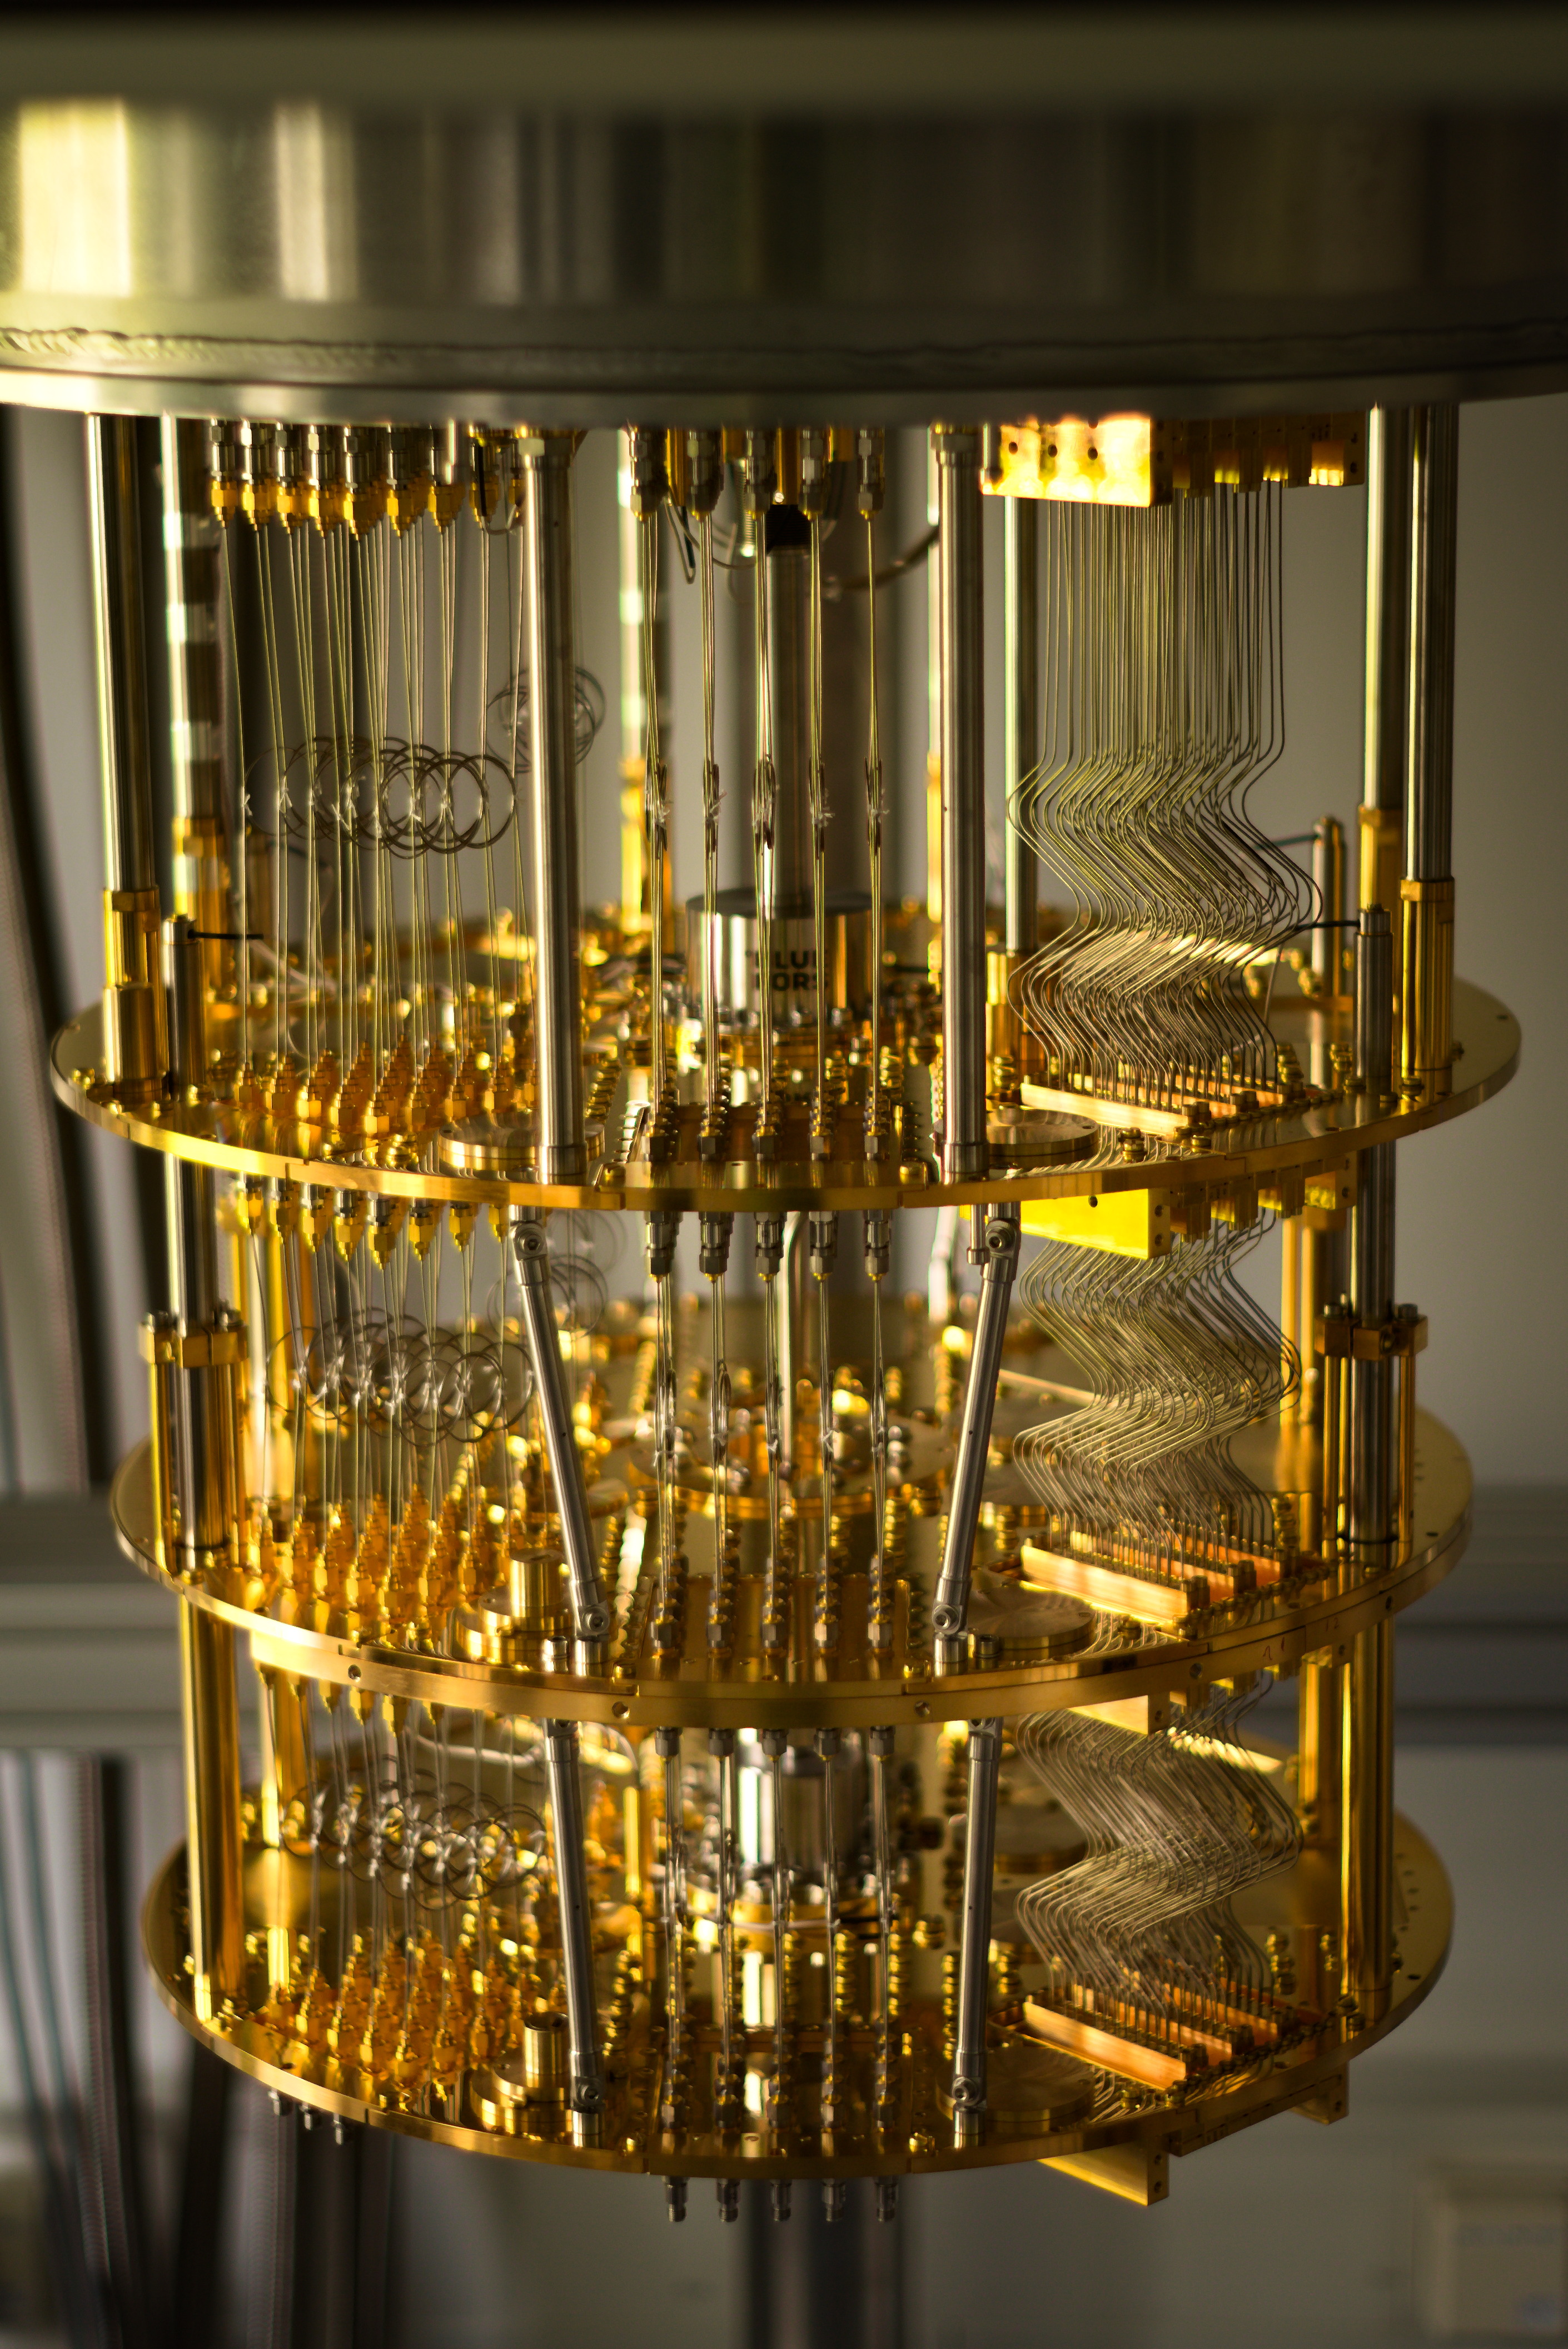 Chandelier architecture of a quantum computer.